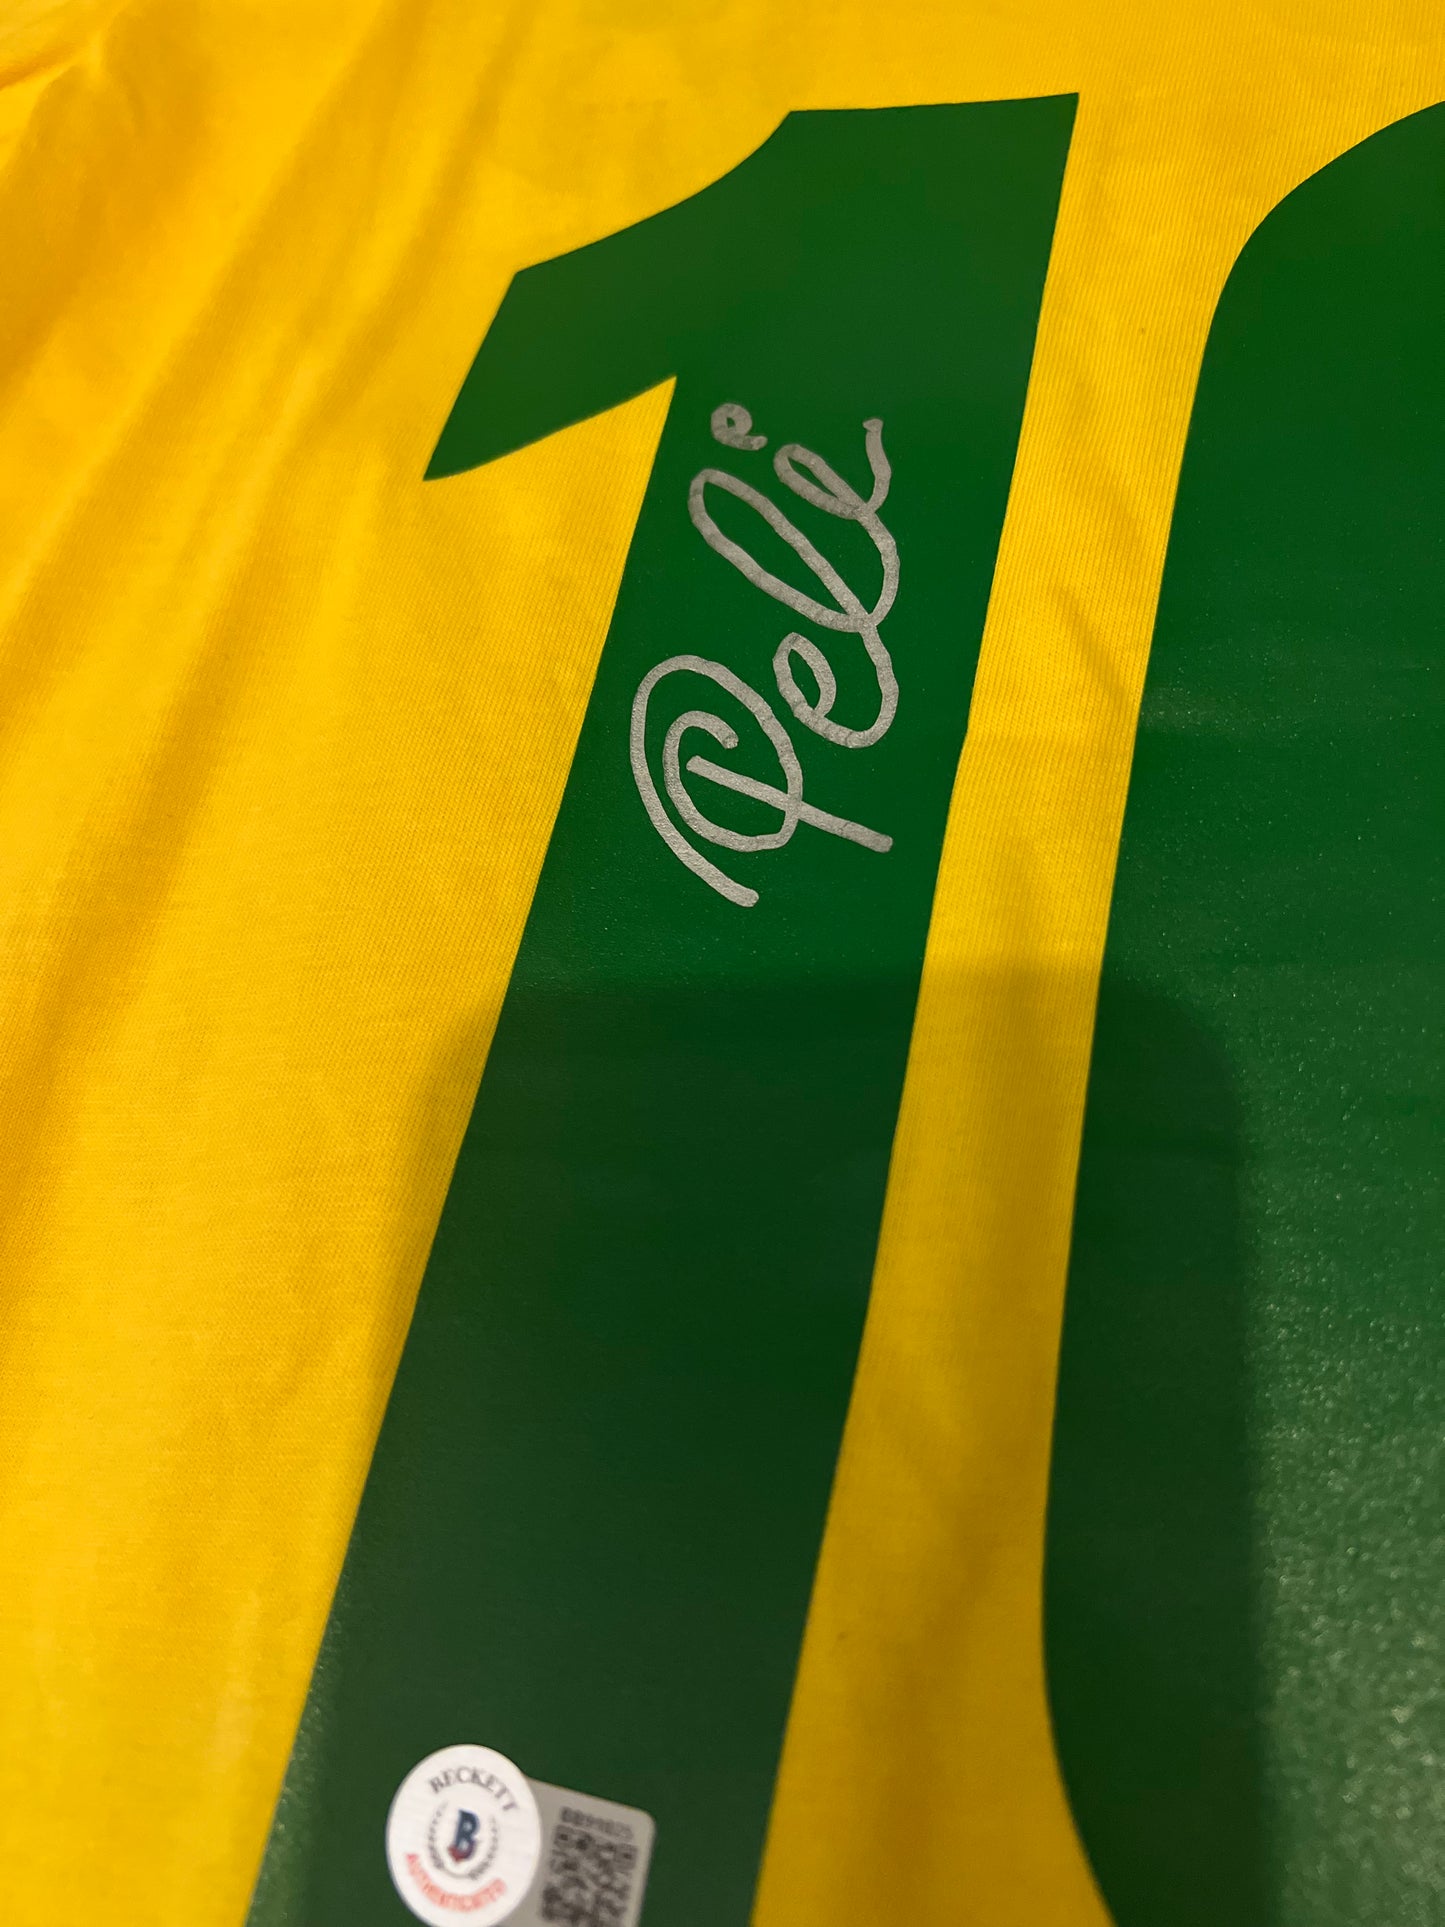 Pele Signed Brazil Football Shirt